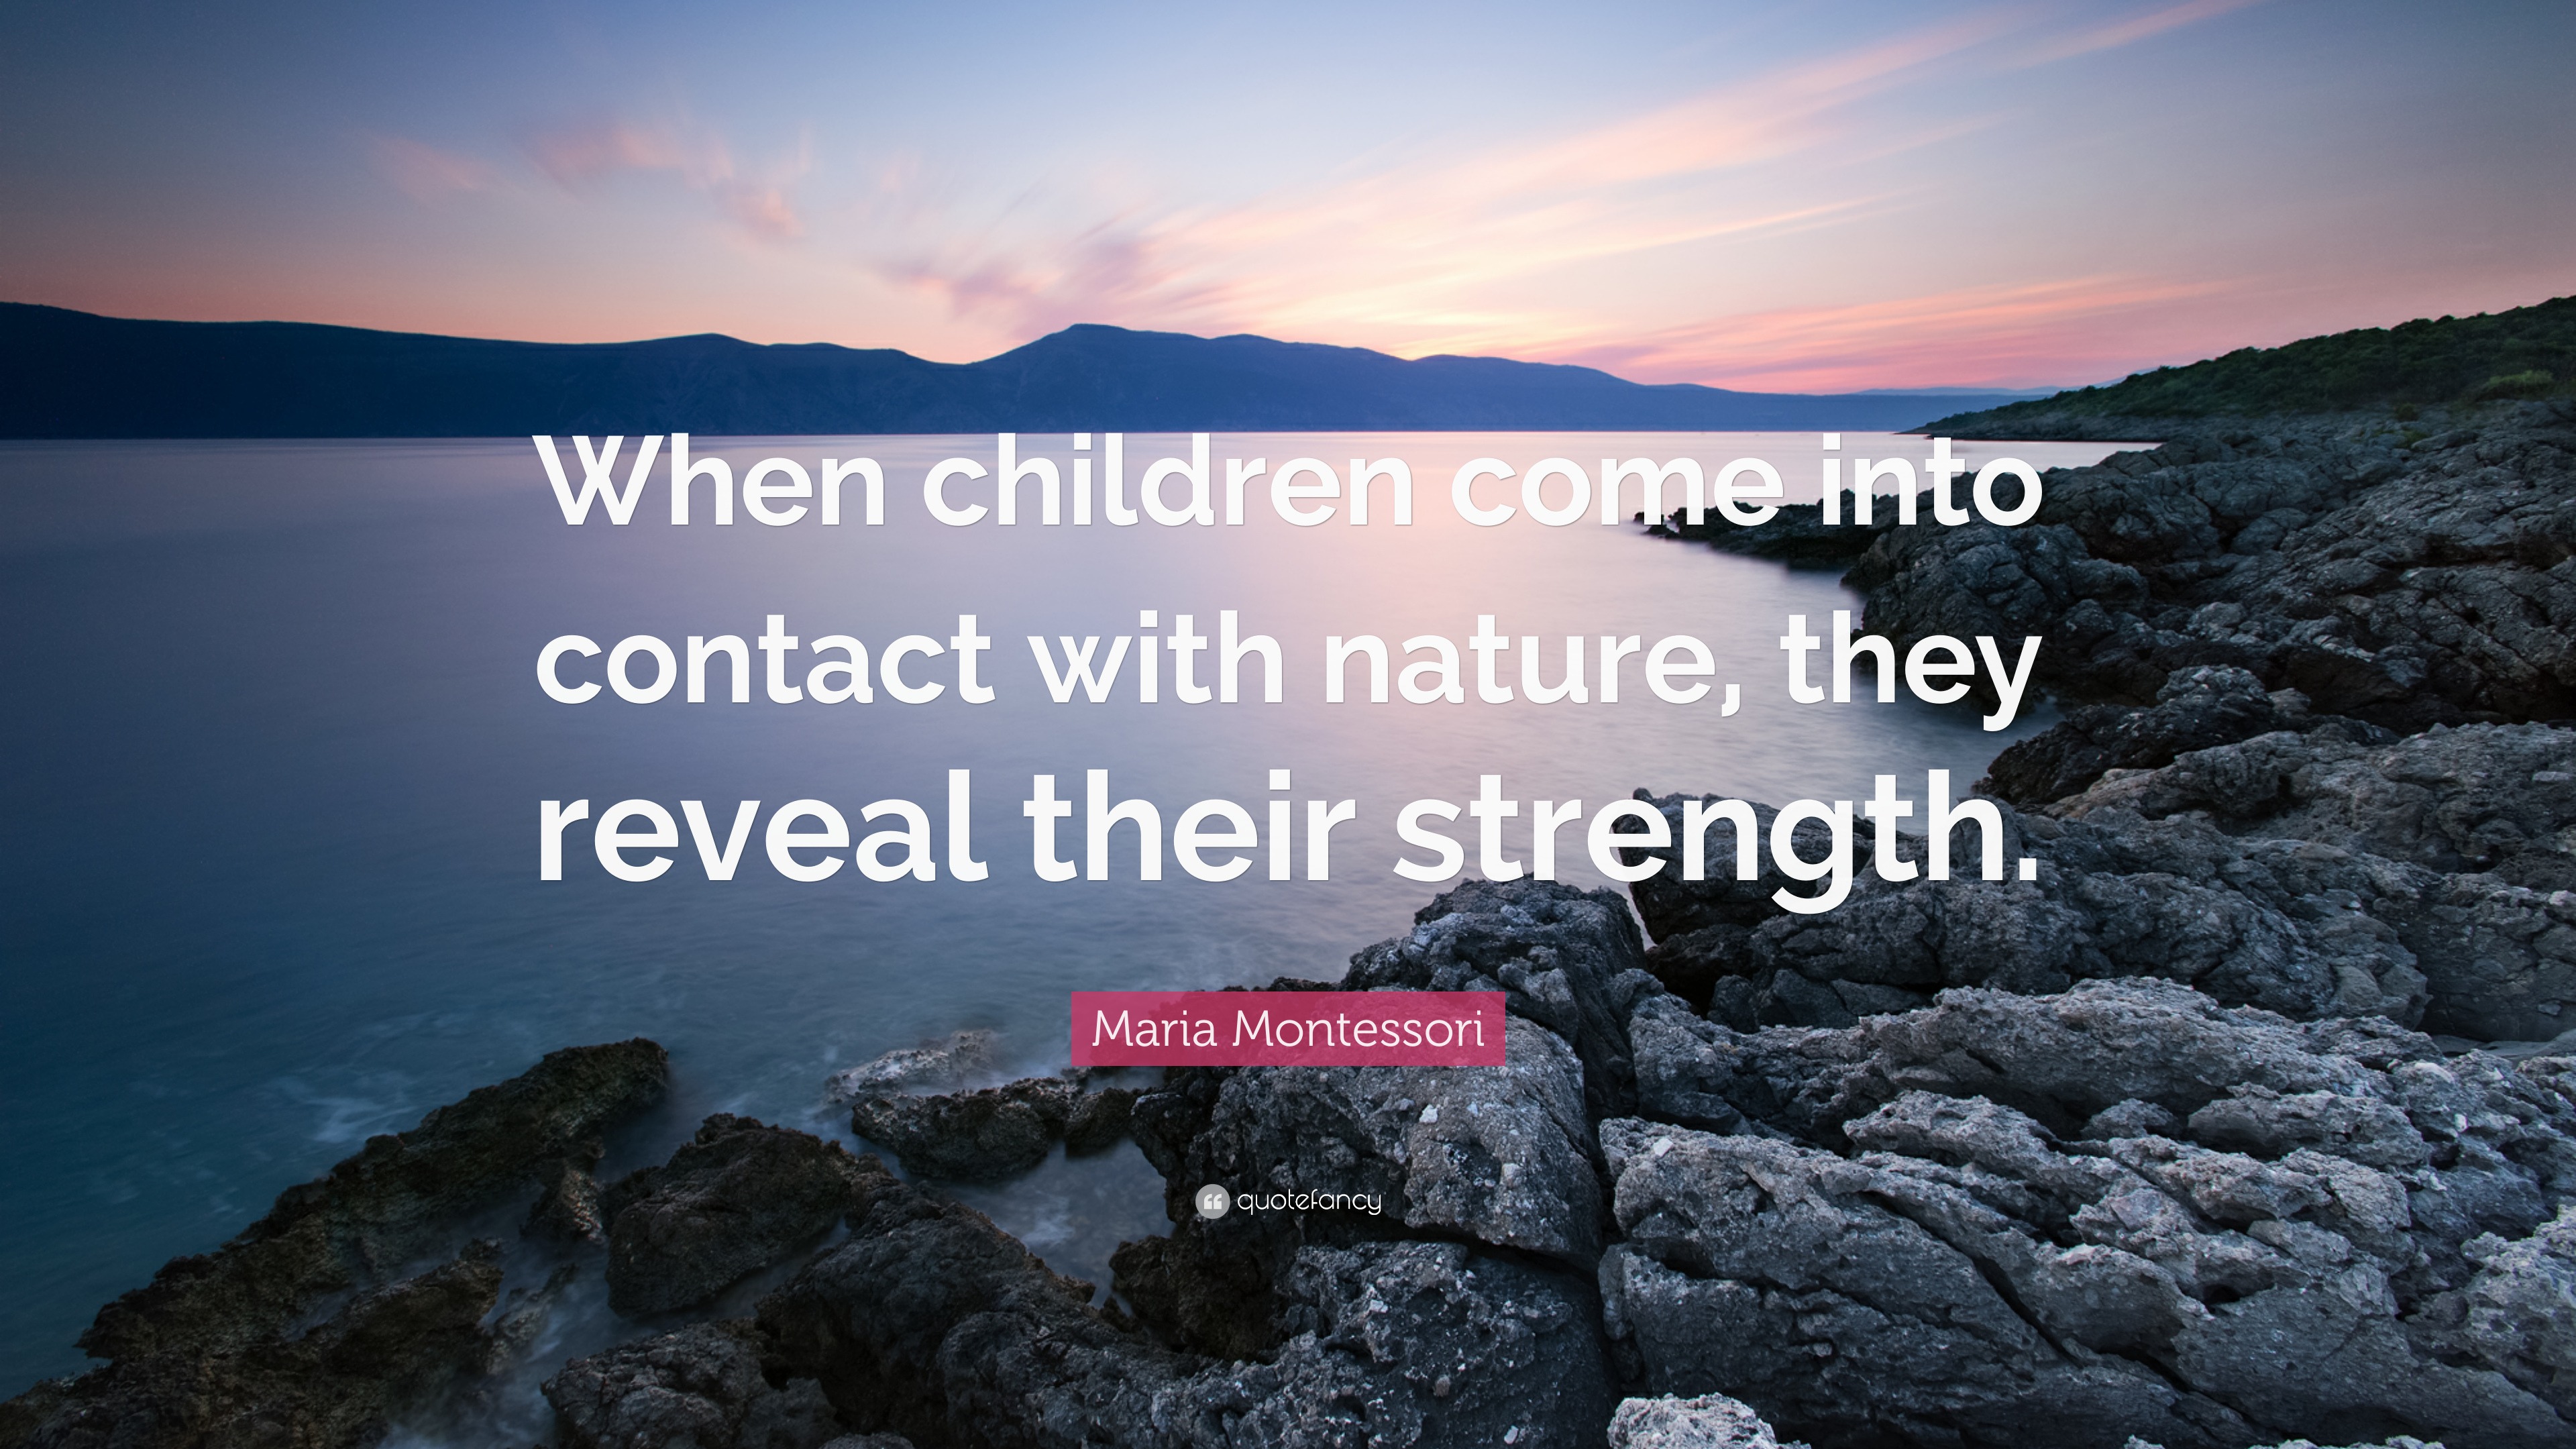 Maria Montessori Quote: “When children come contact nature, they their